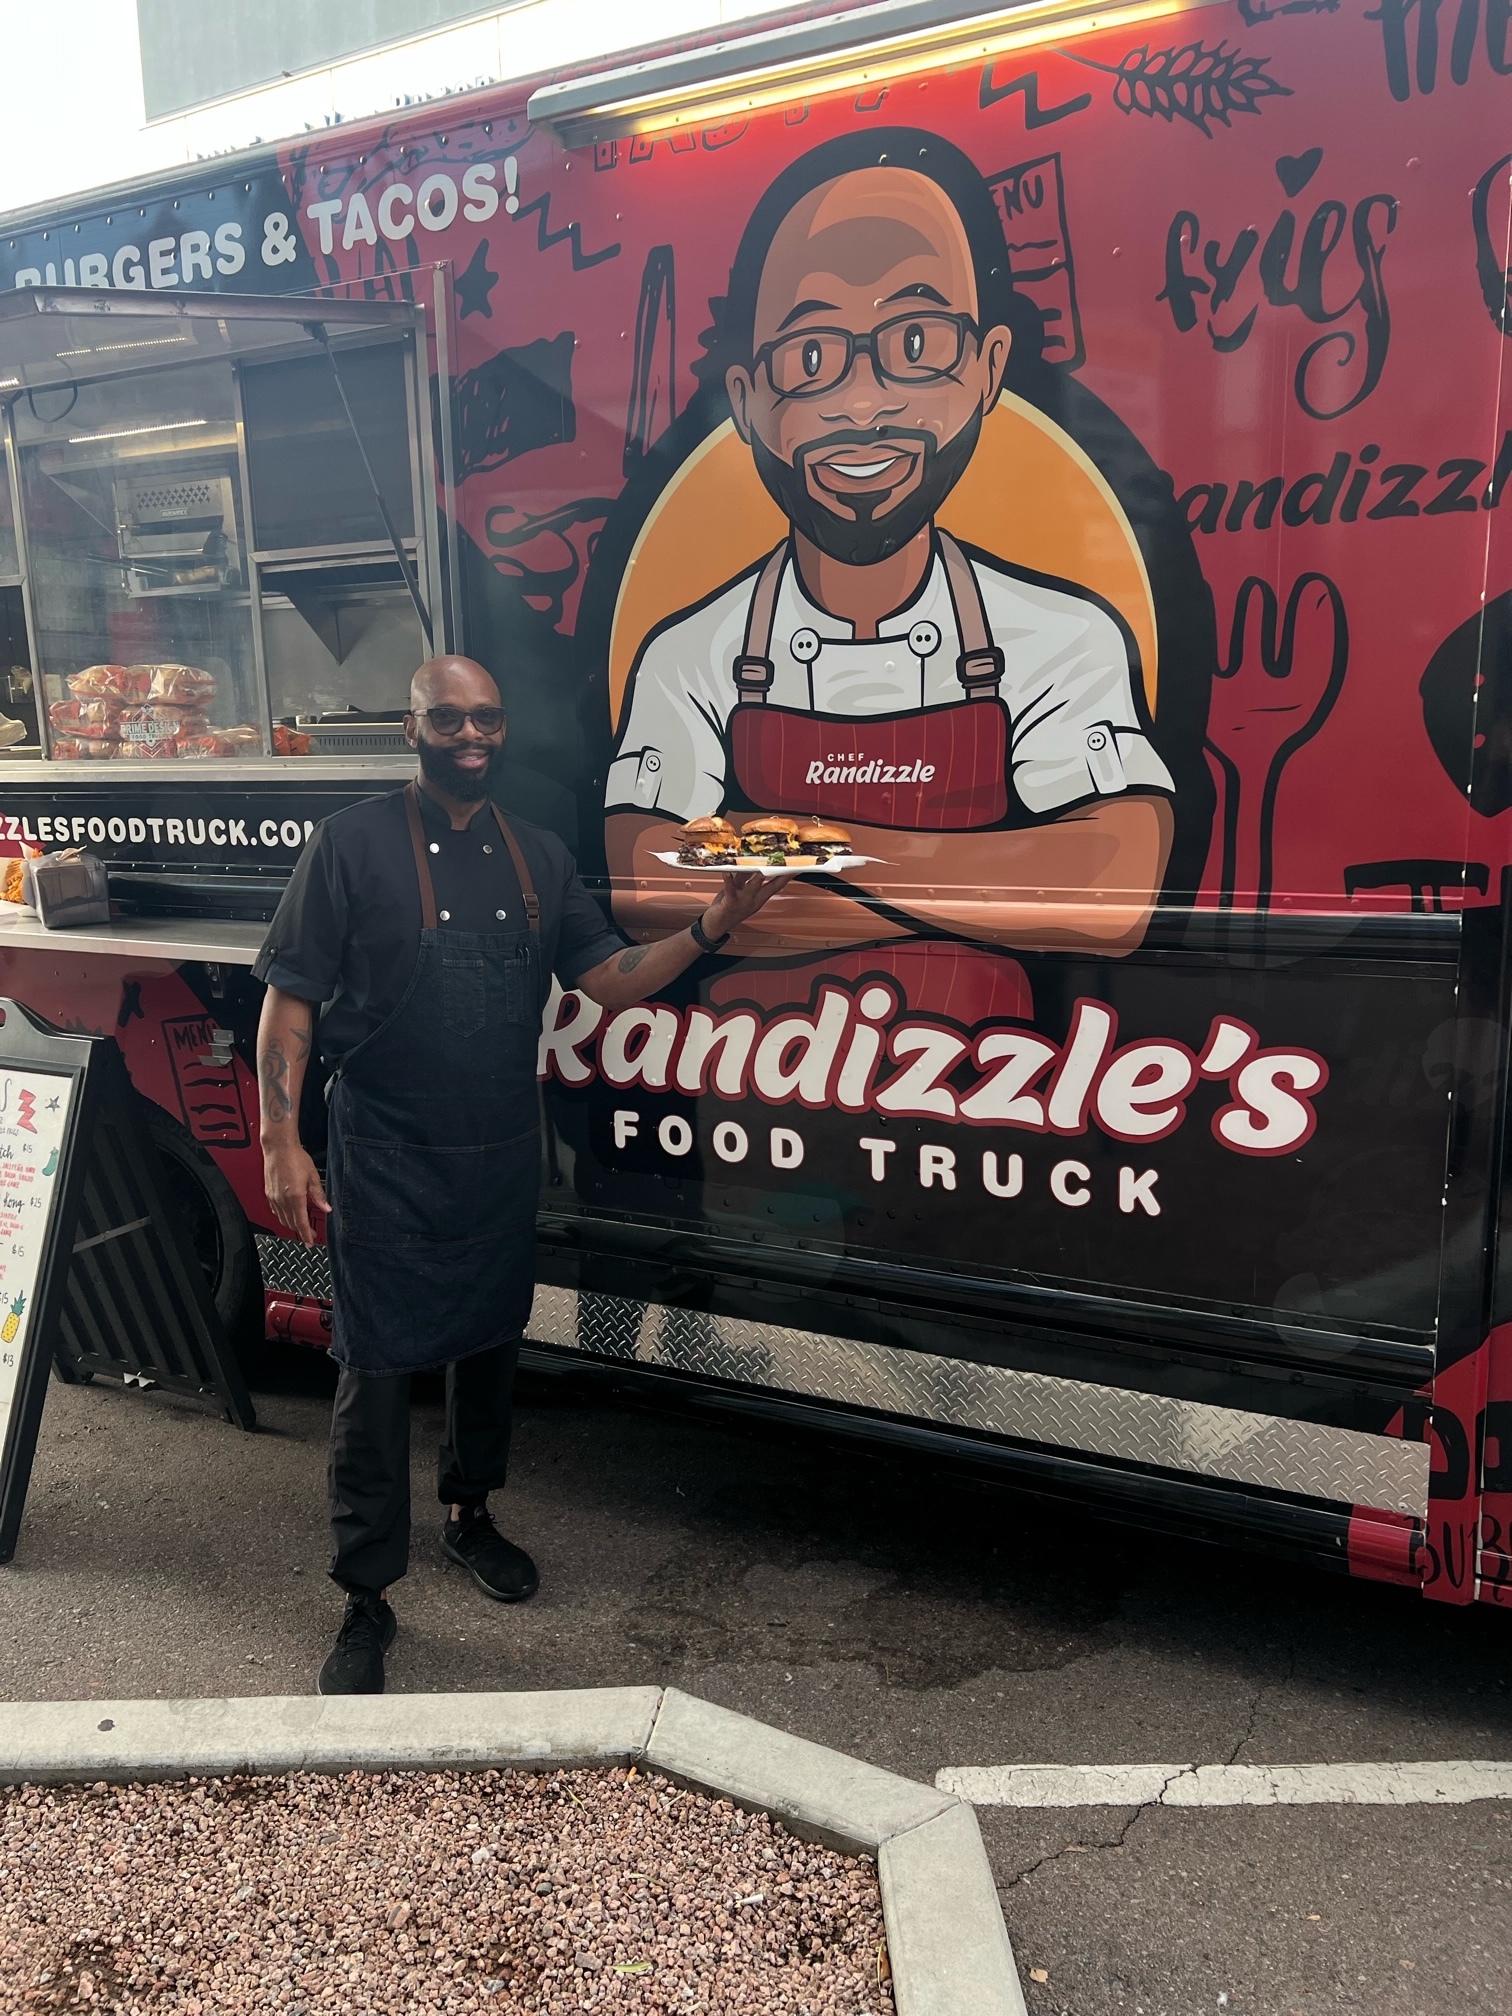 Randizzle's Food Truck